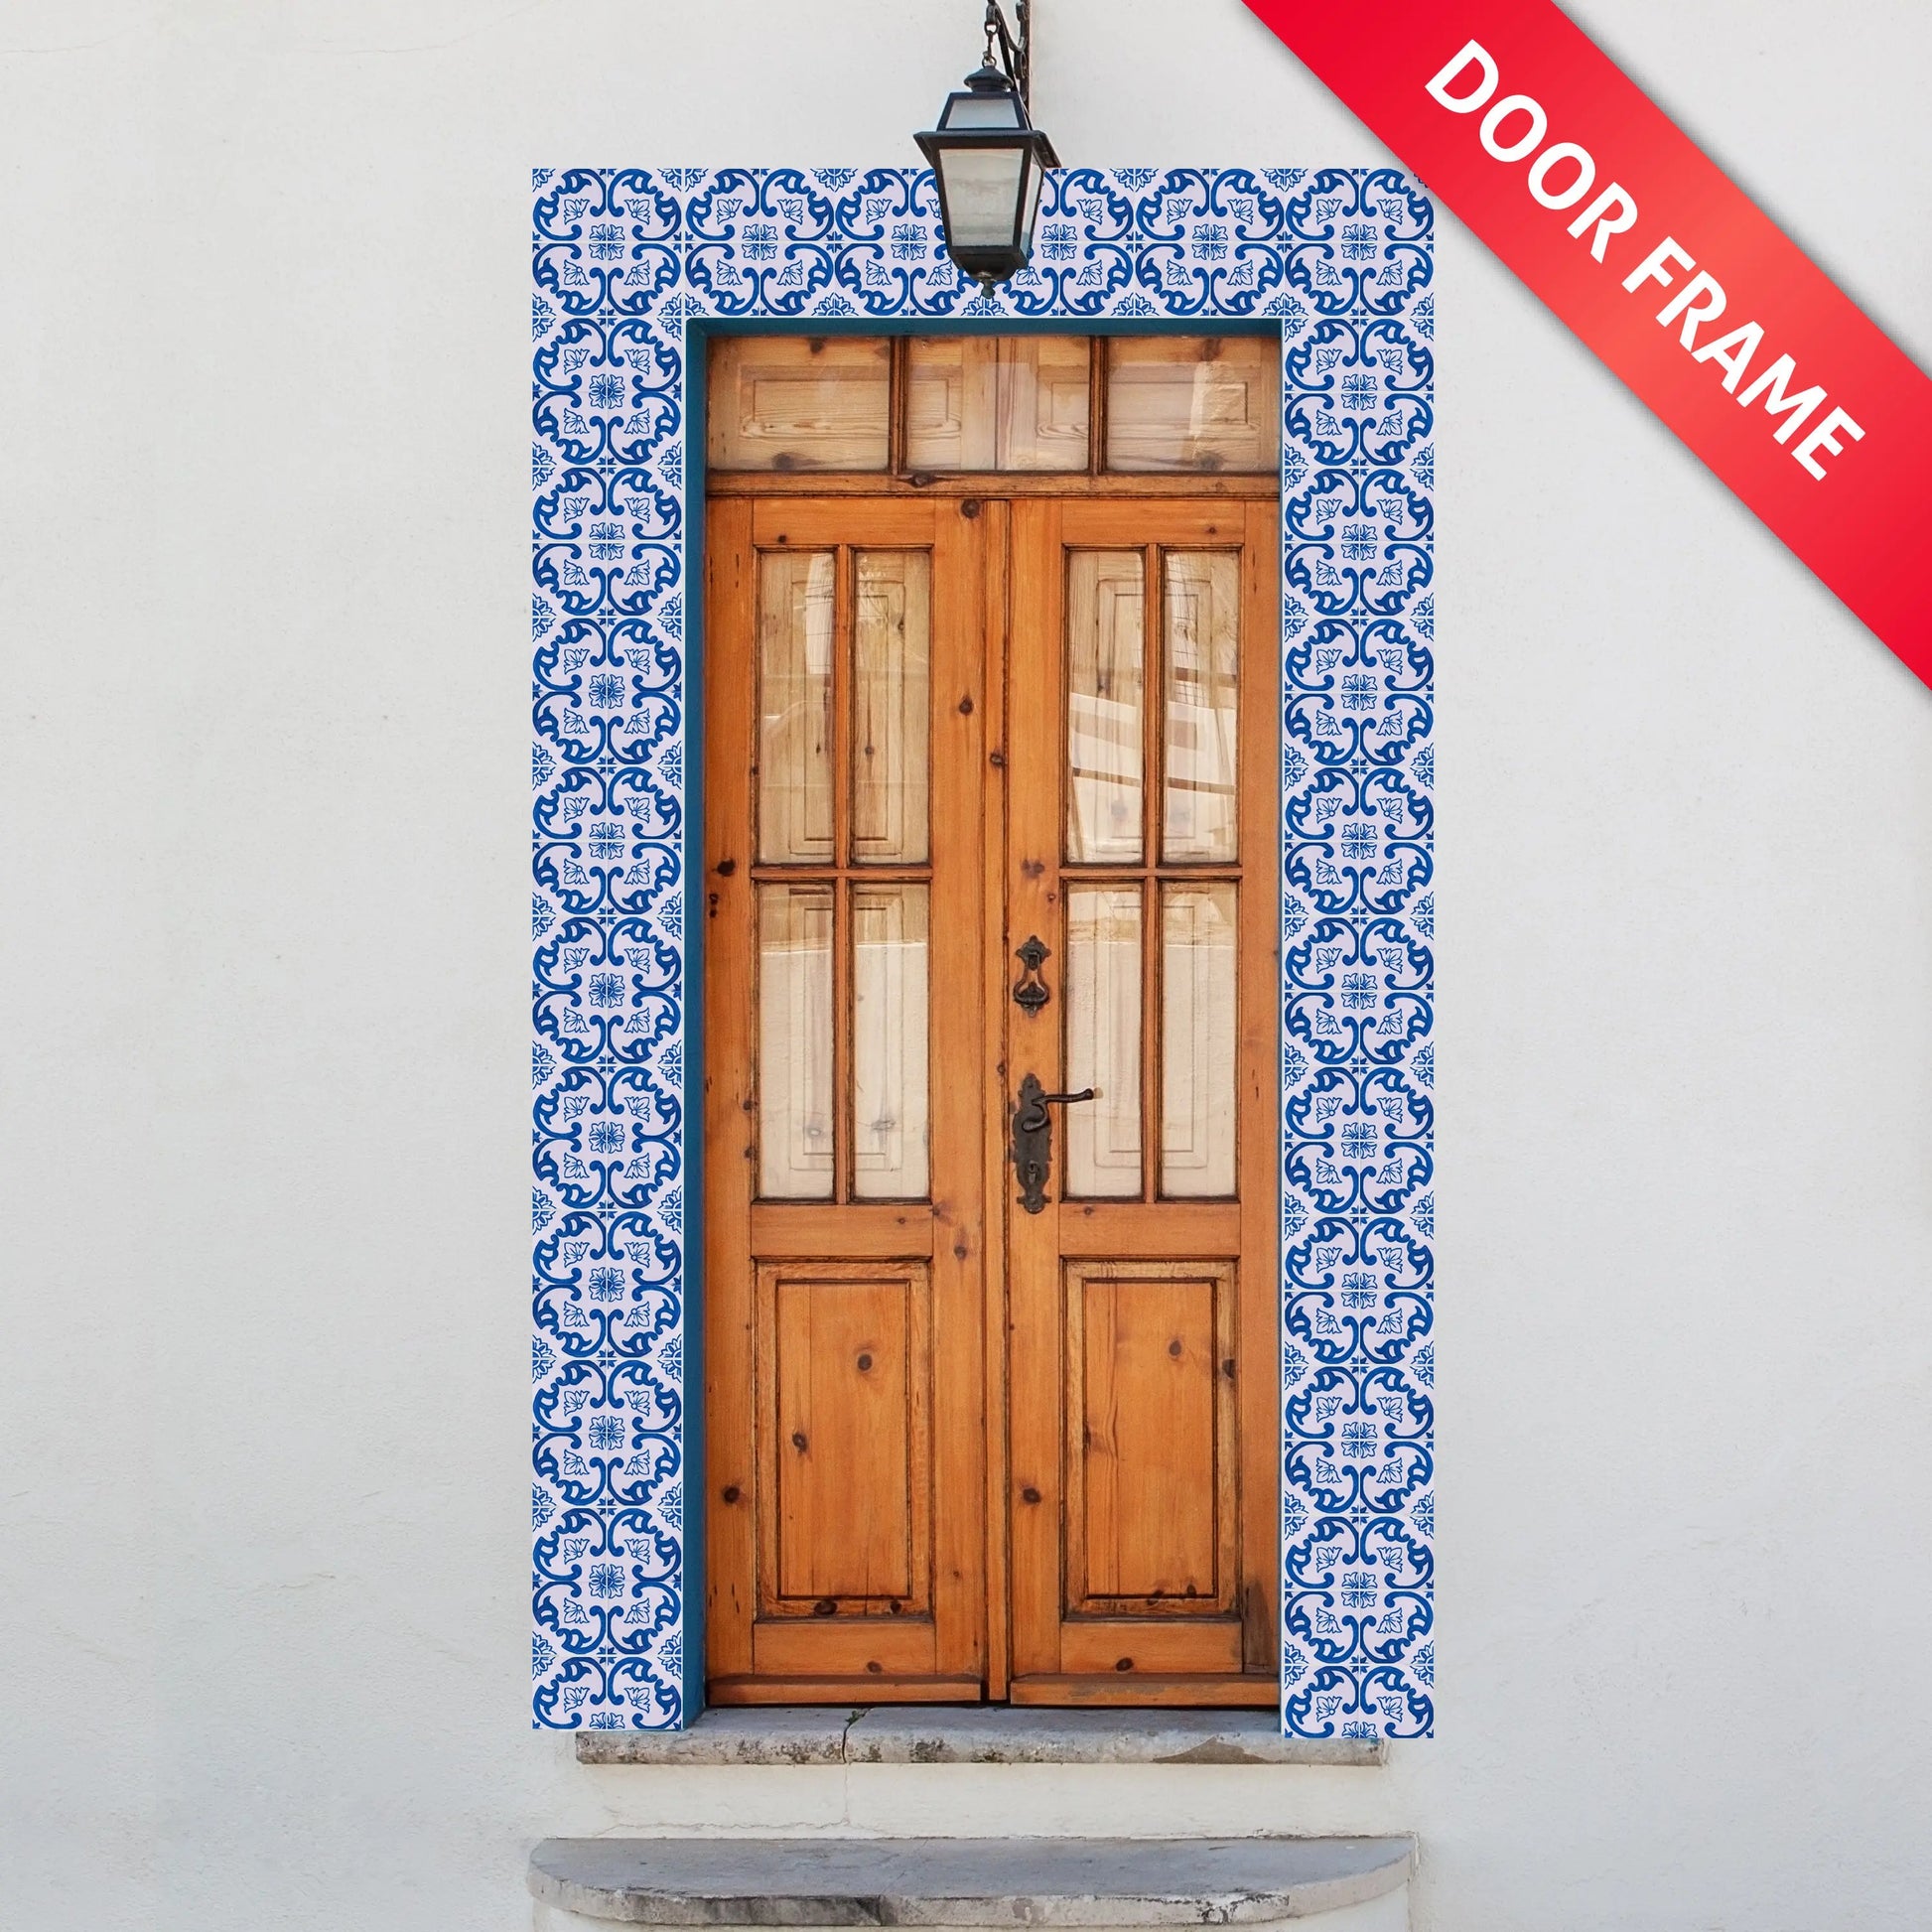 Portuguese Inspired Azulejos Blooming Ceramic Tile Door Frame- Rooster Camisa